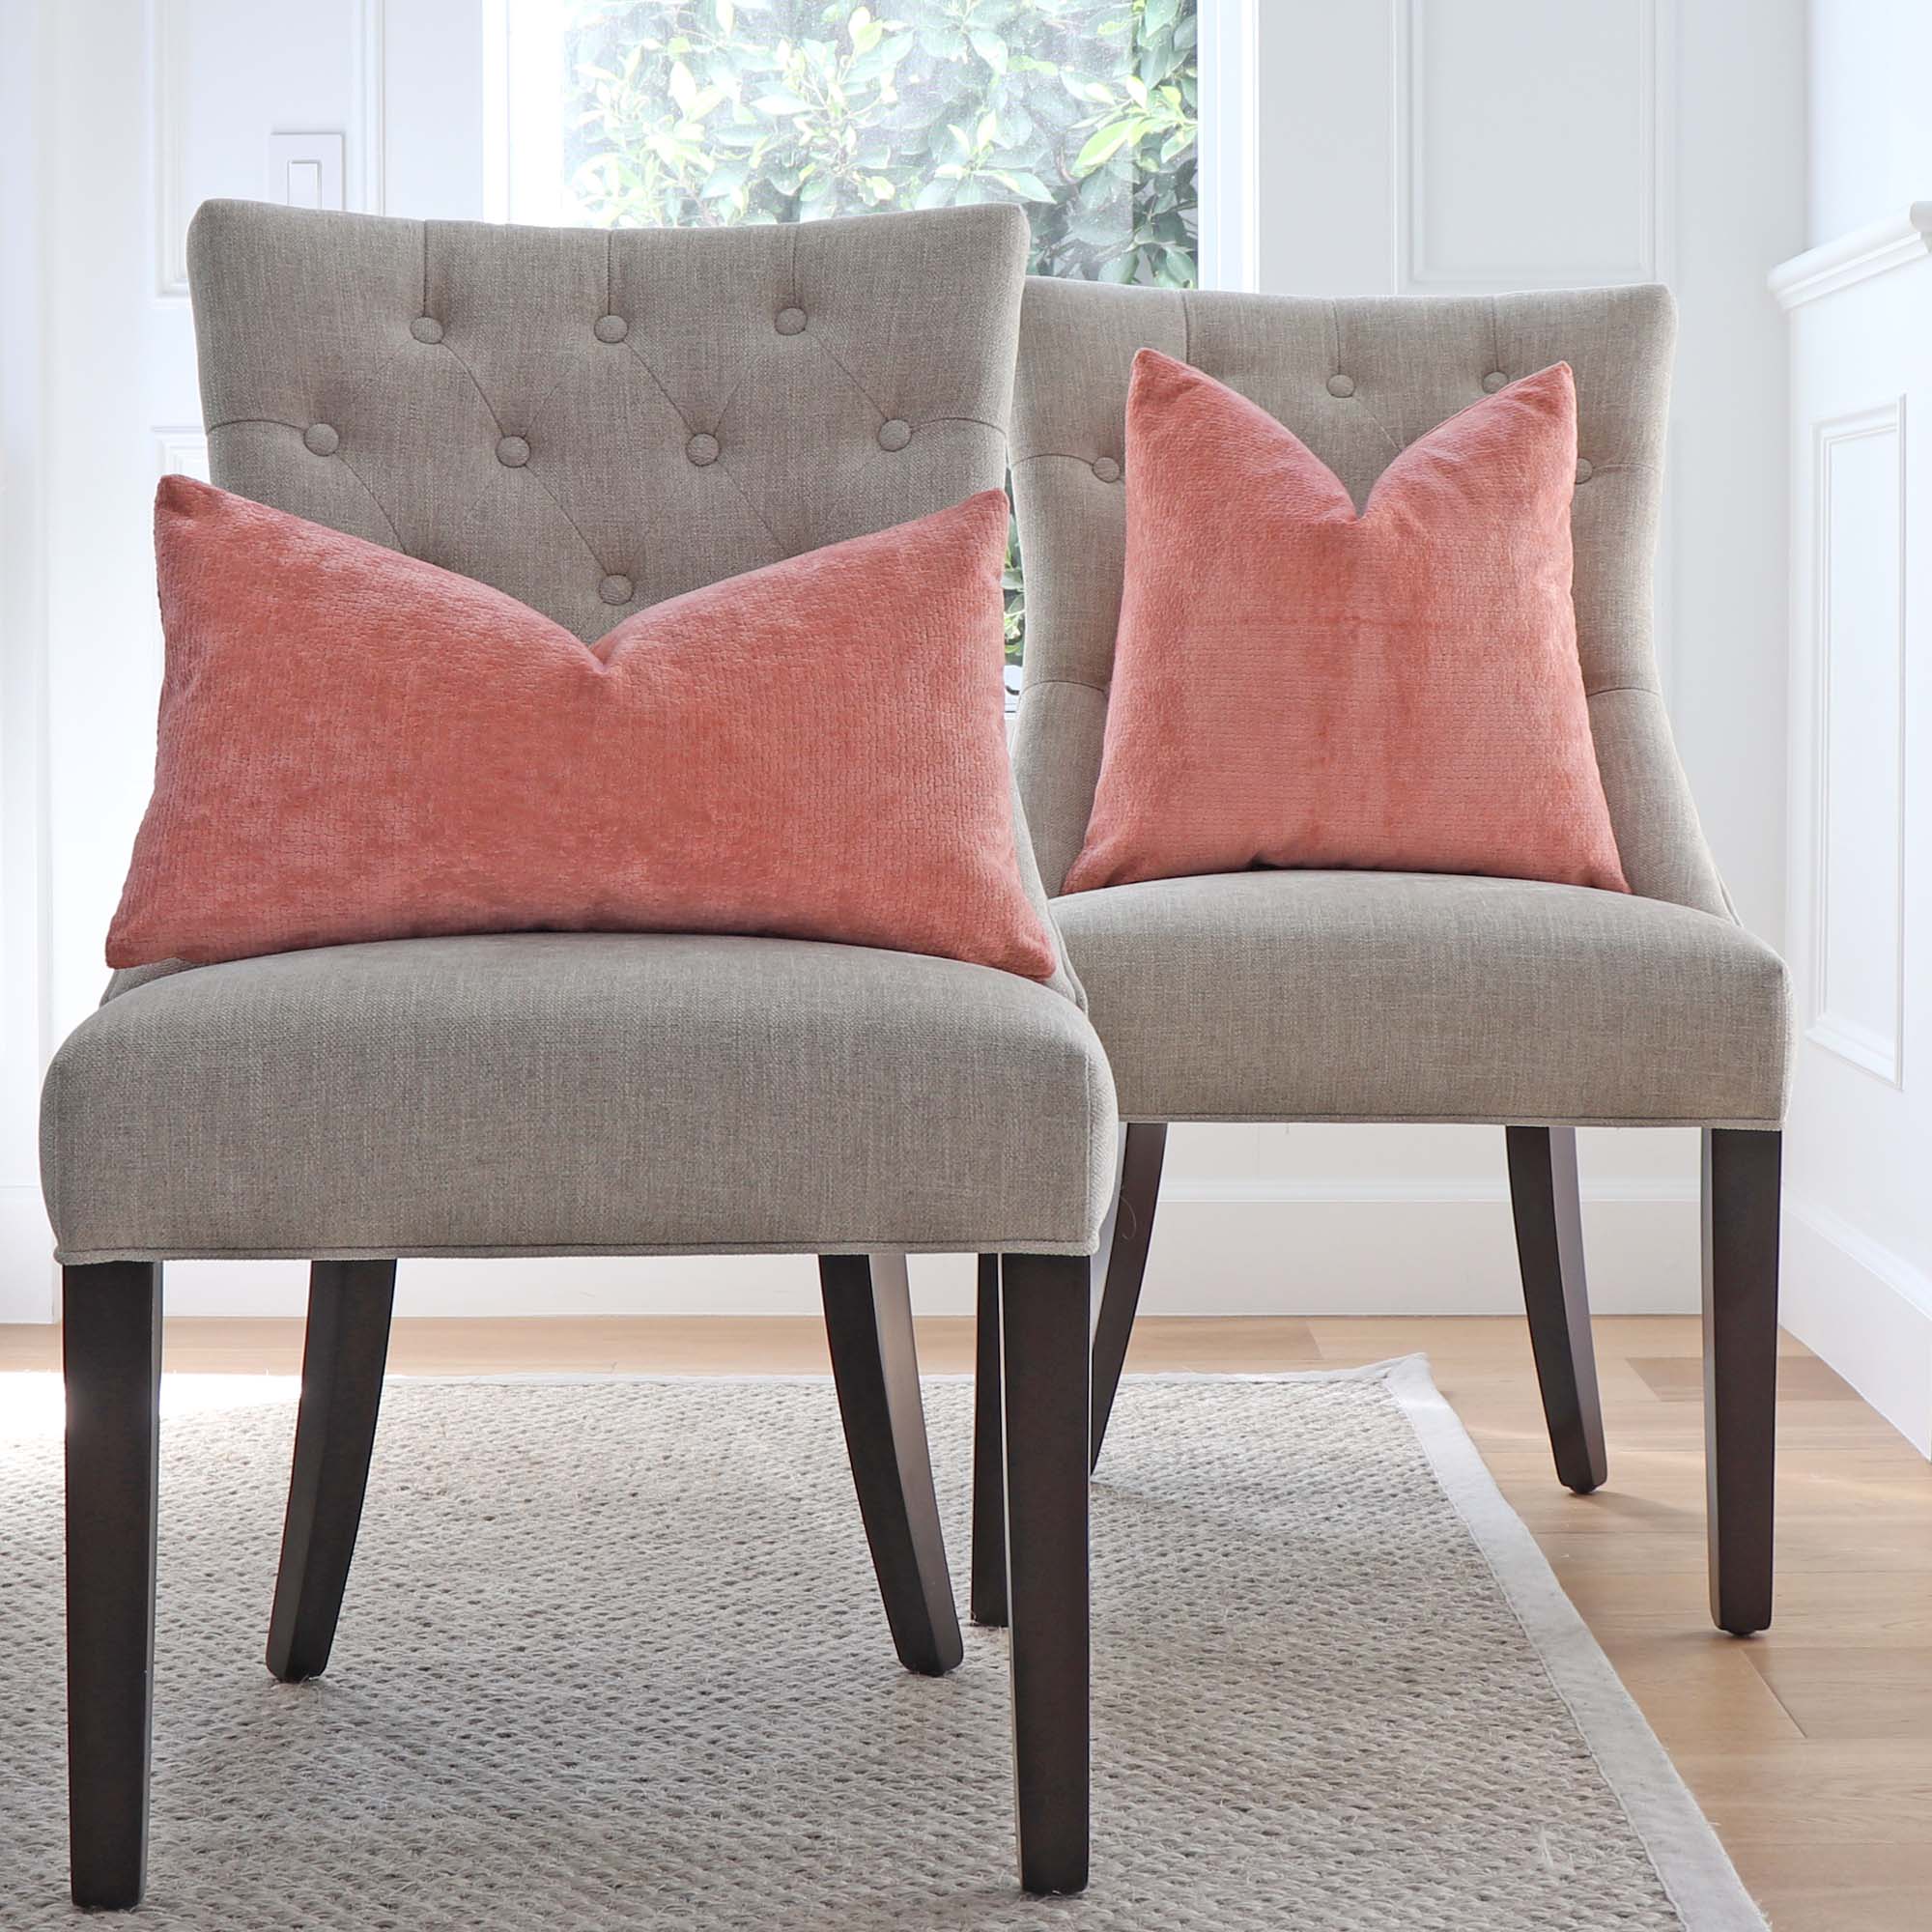 Kelly Wearstler Lee Jofa Rebus Sorbet Salmon Pink Velvet Throw Pillow Cover on Dining Chairs